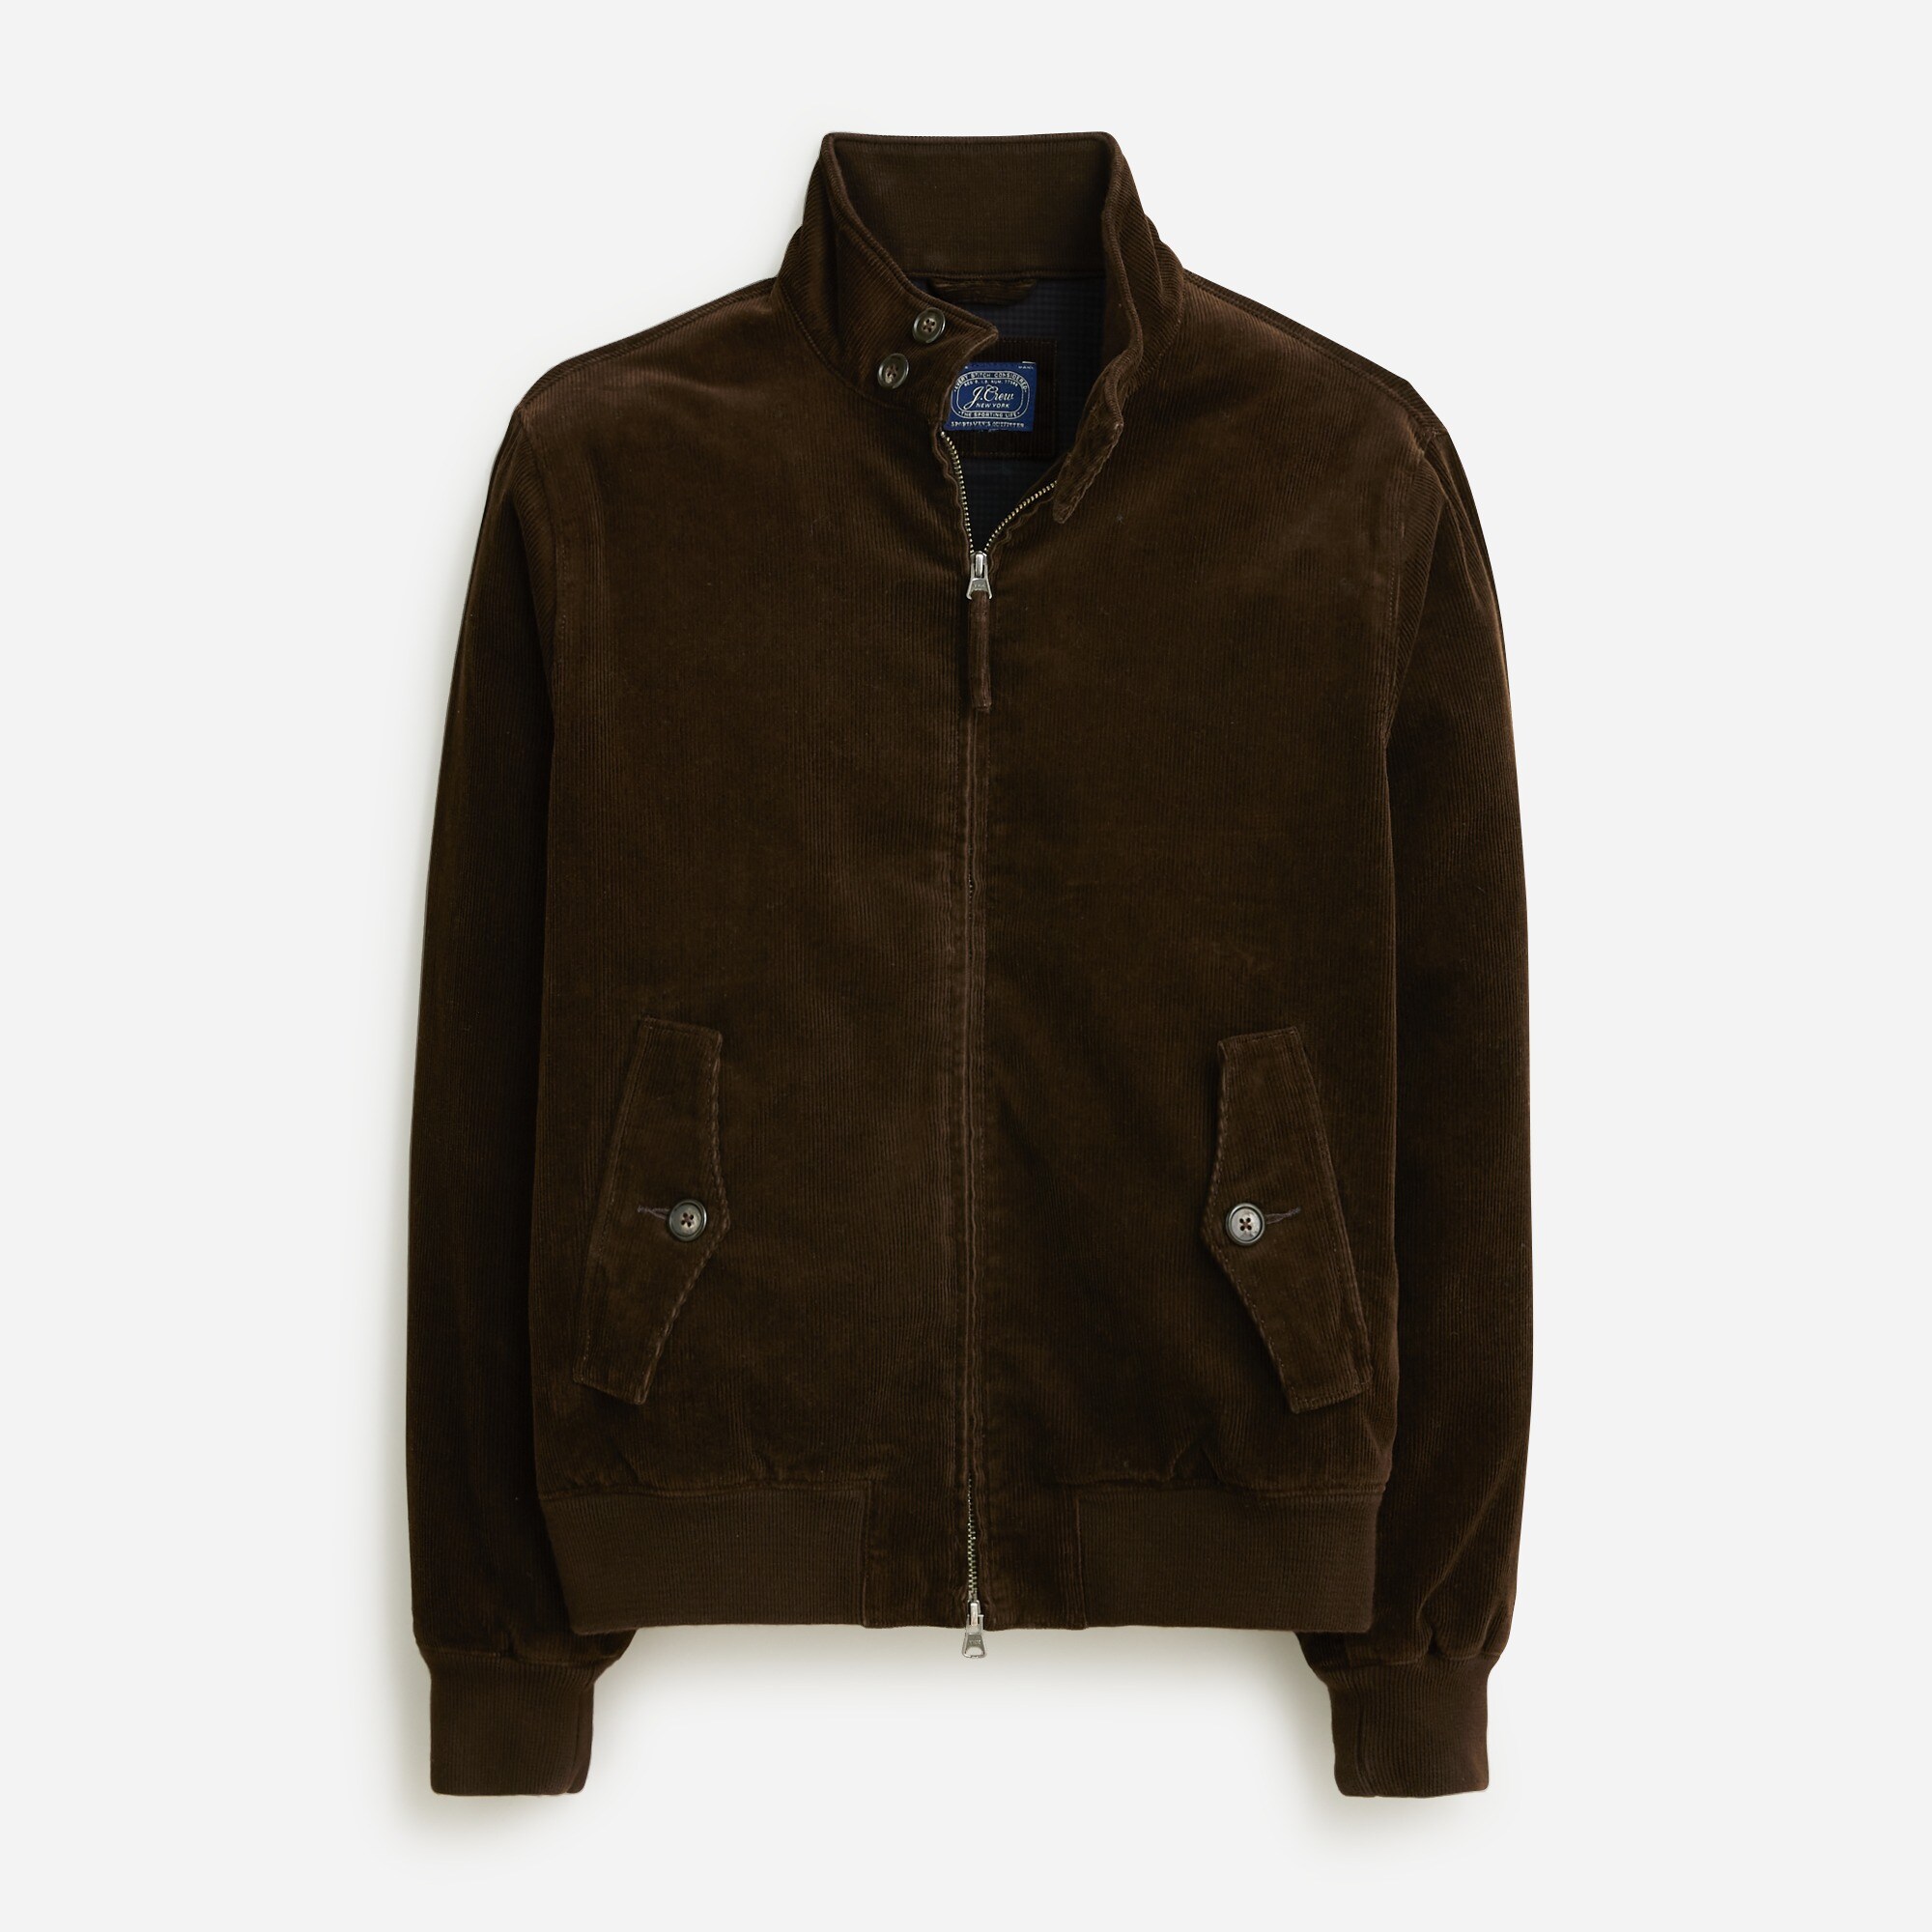  Harrington jacket in cotton corduroy